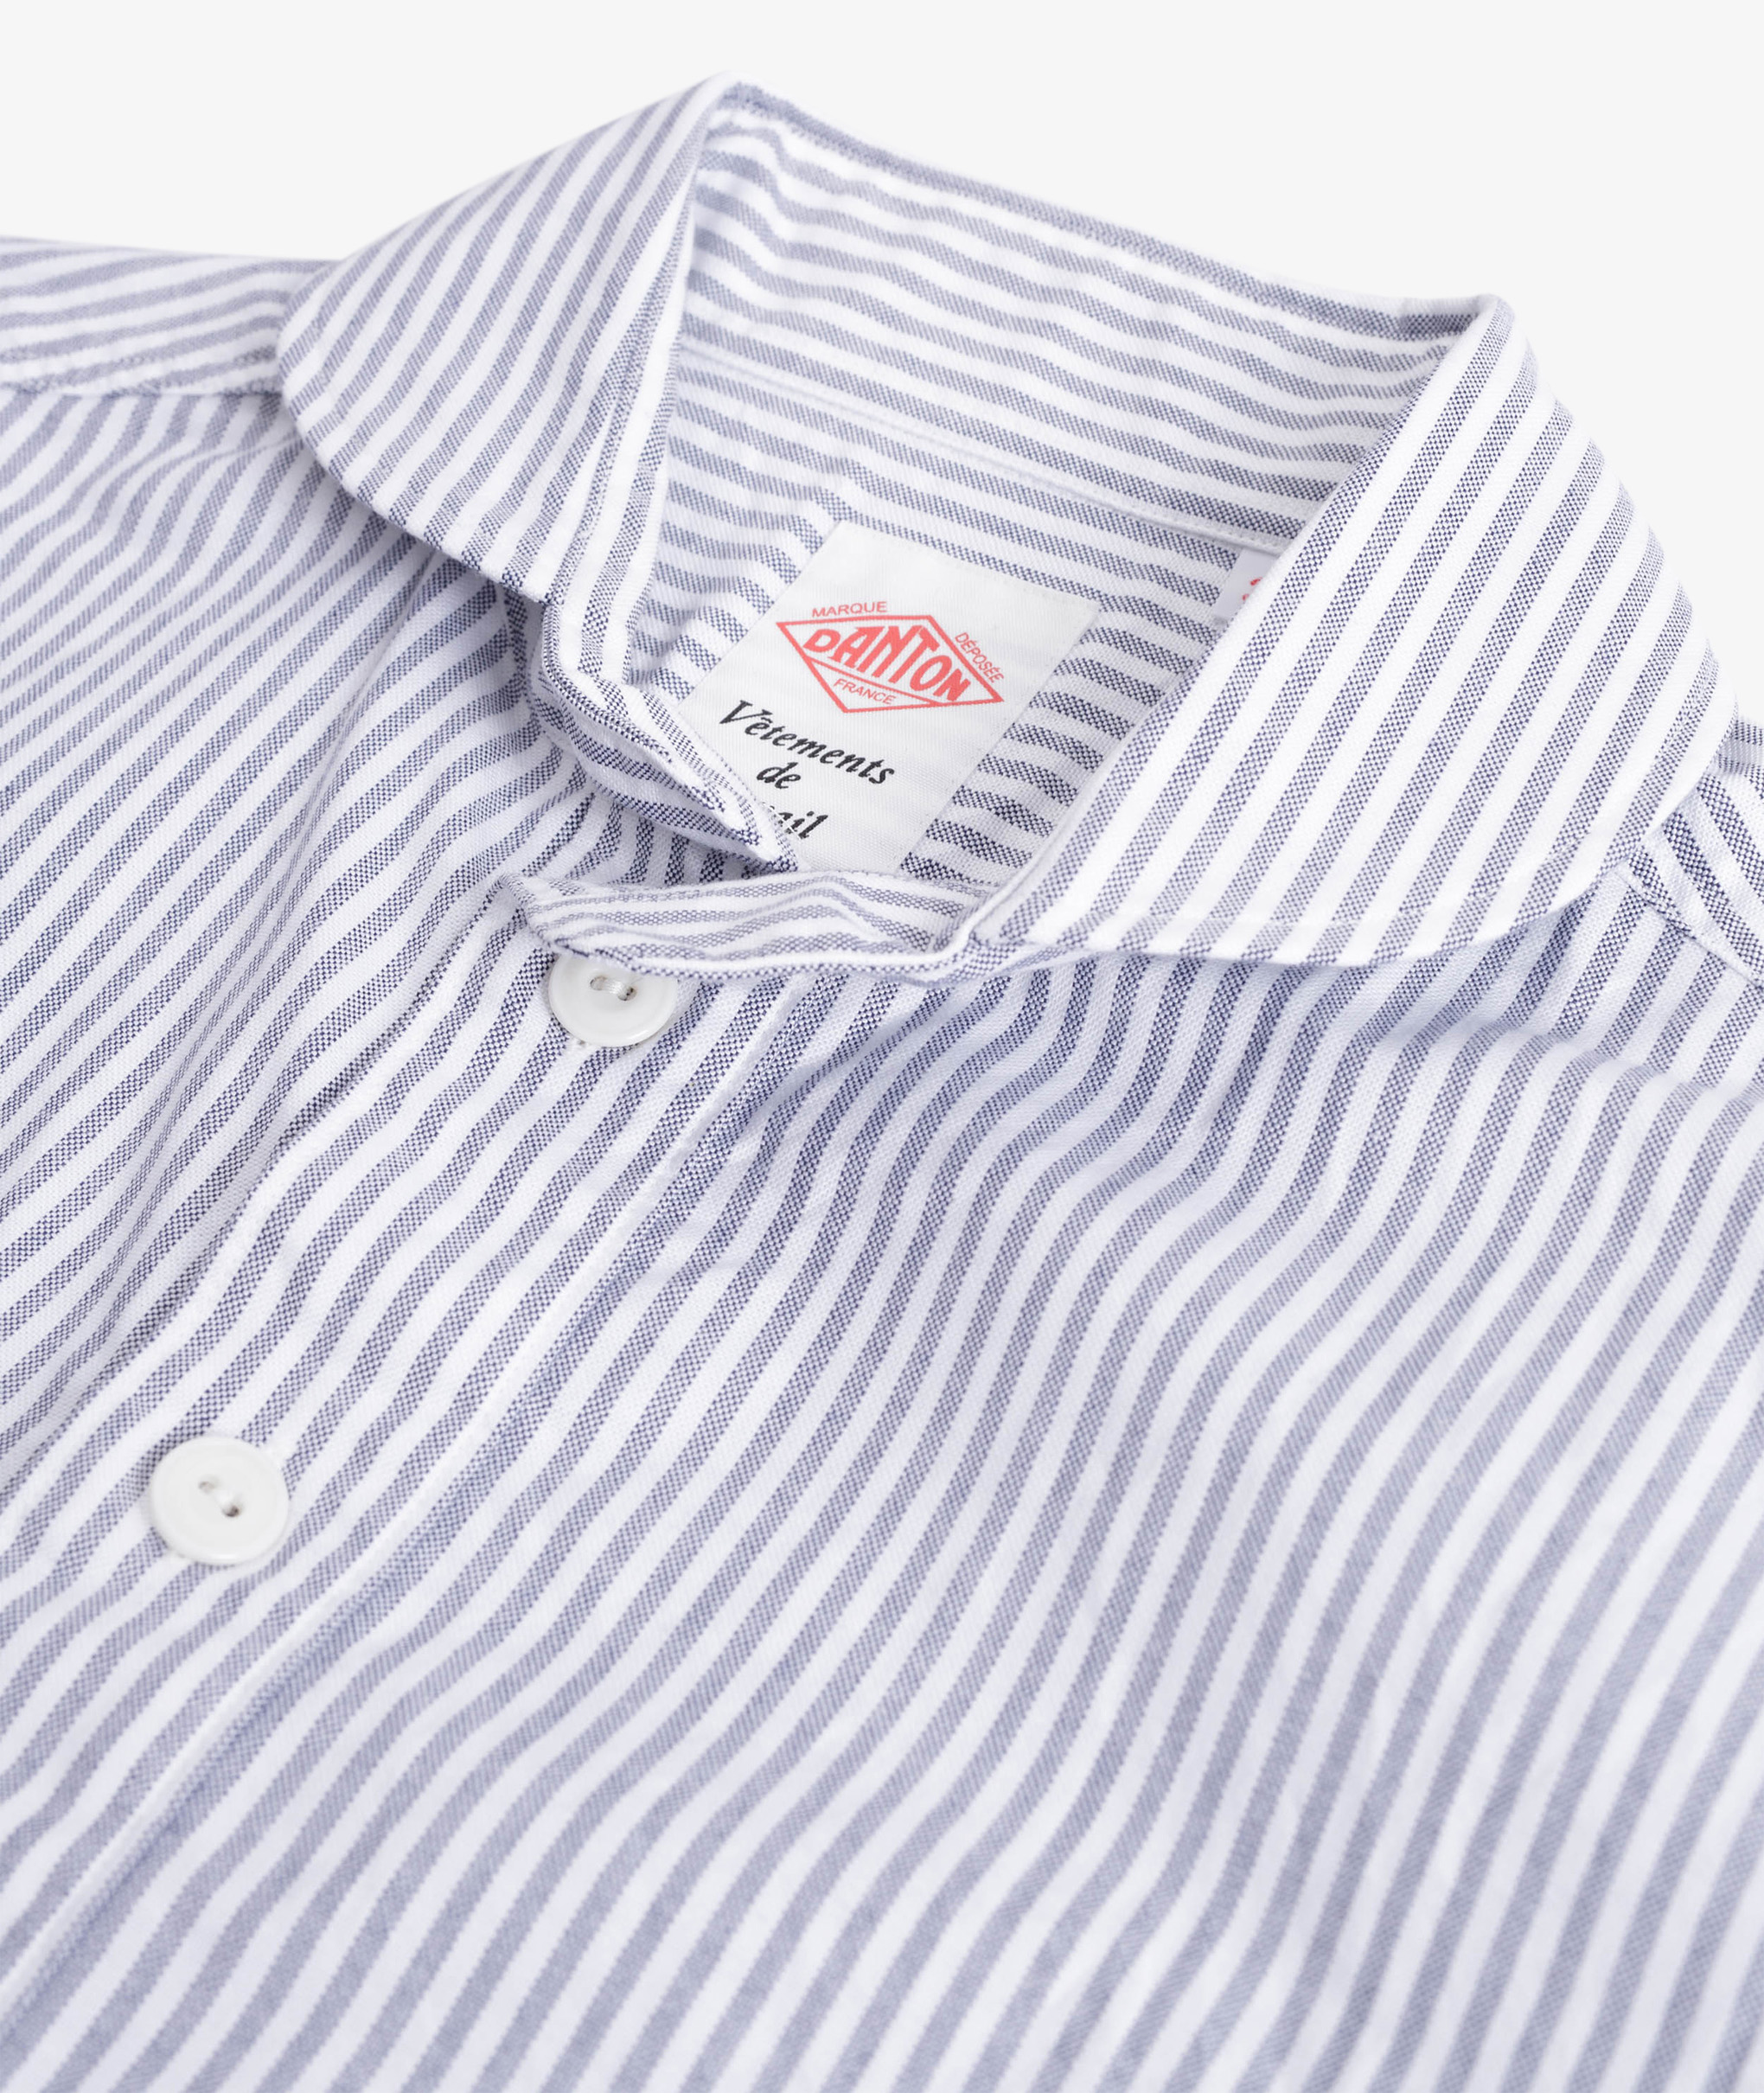 Norse Store | Shipping Worldwide - Danton Round Collar P.O Shirt S 